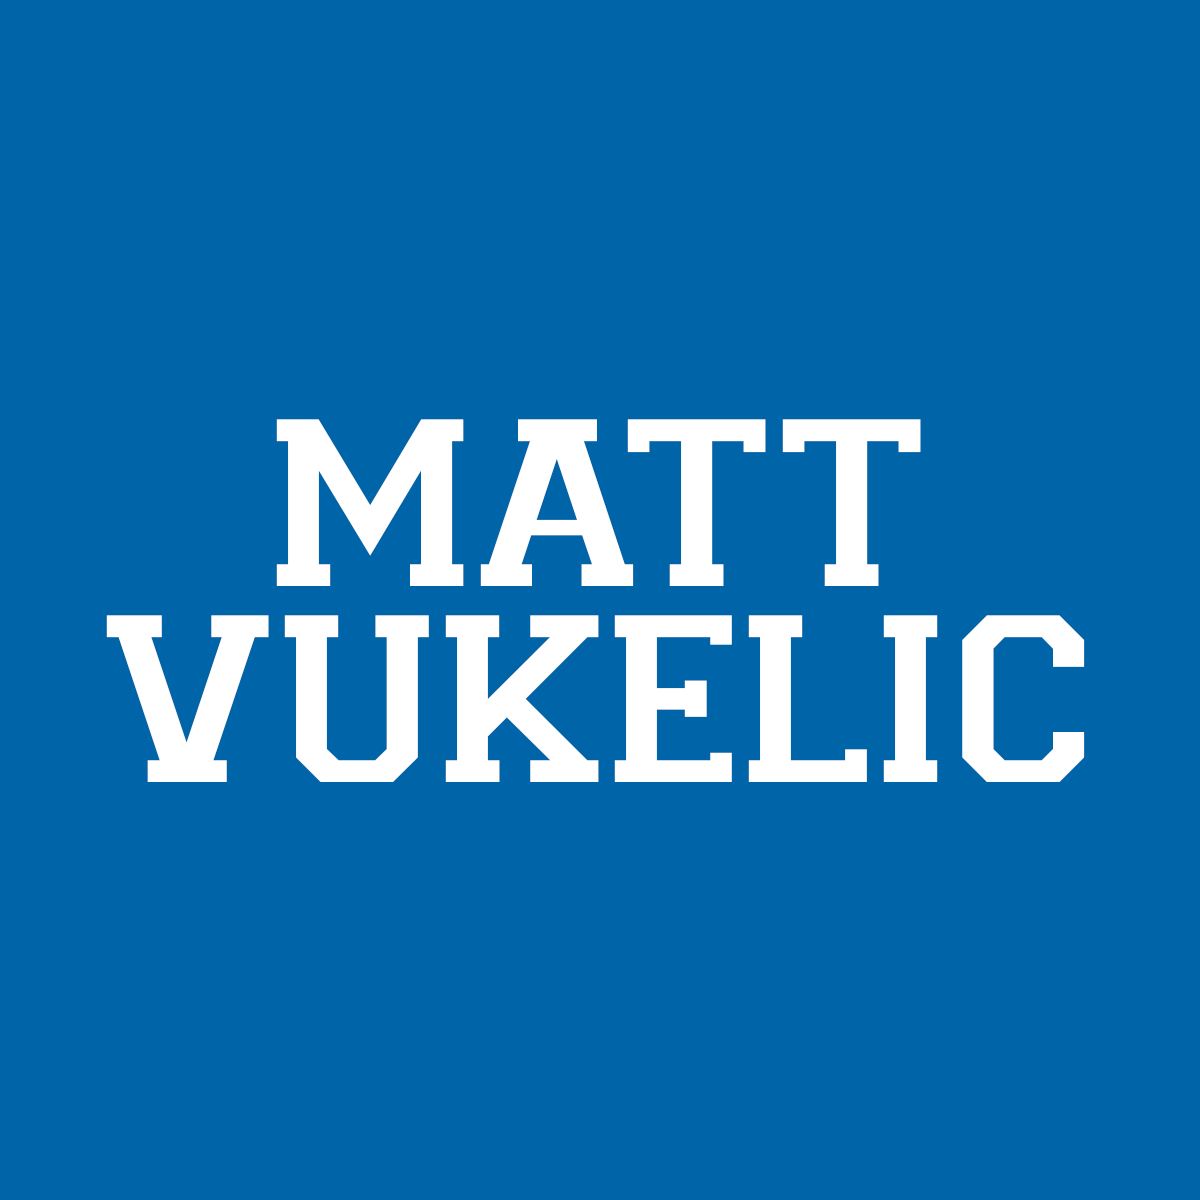 Matt Vukelic